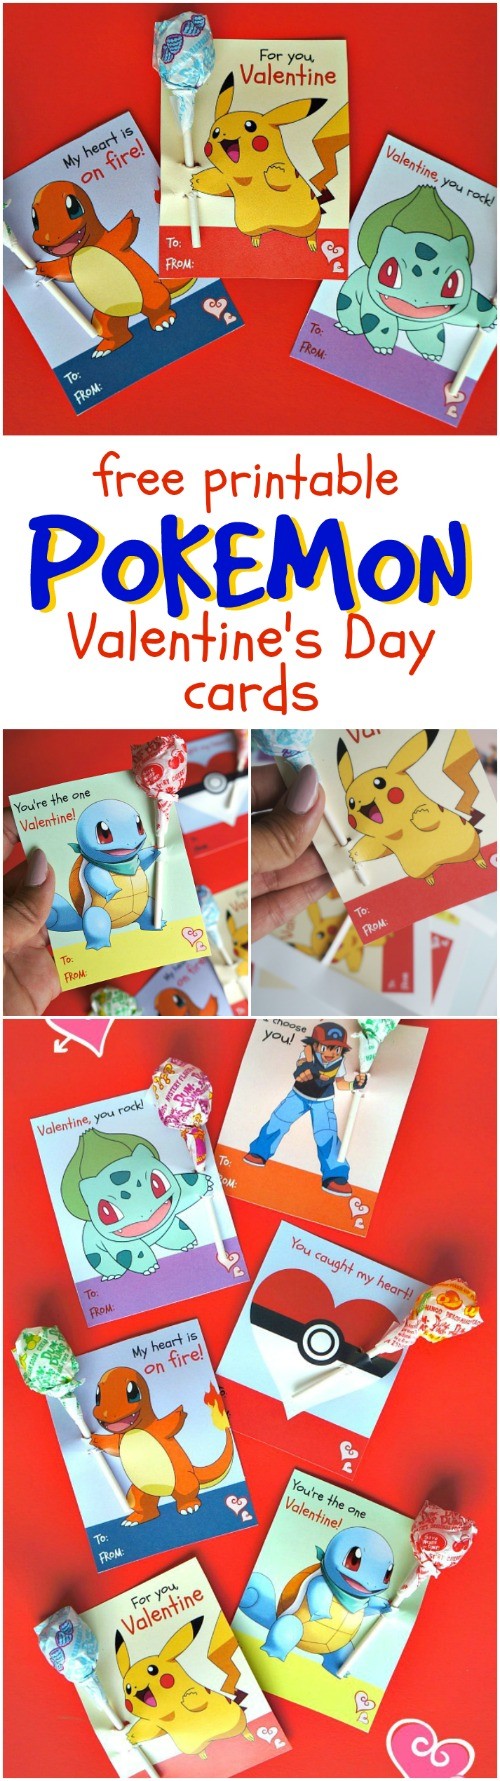 Pokemon Free Printable Valentines